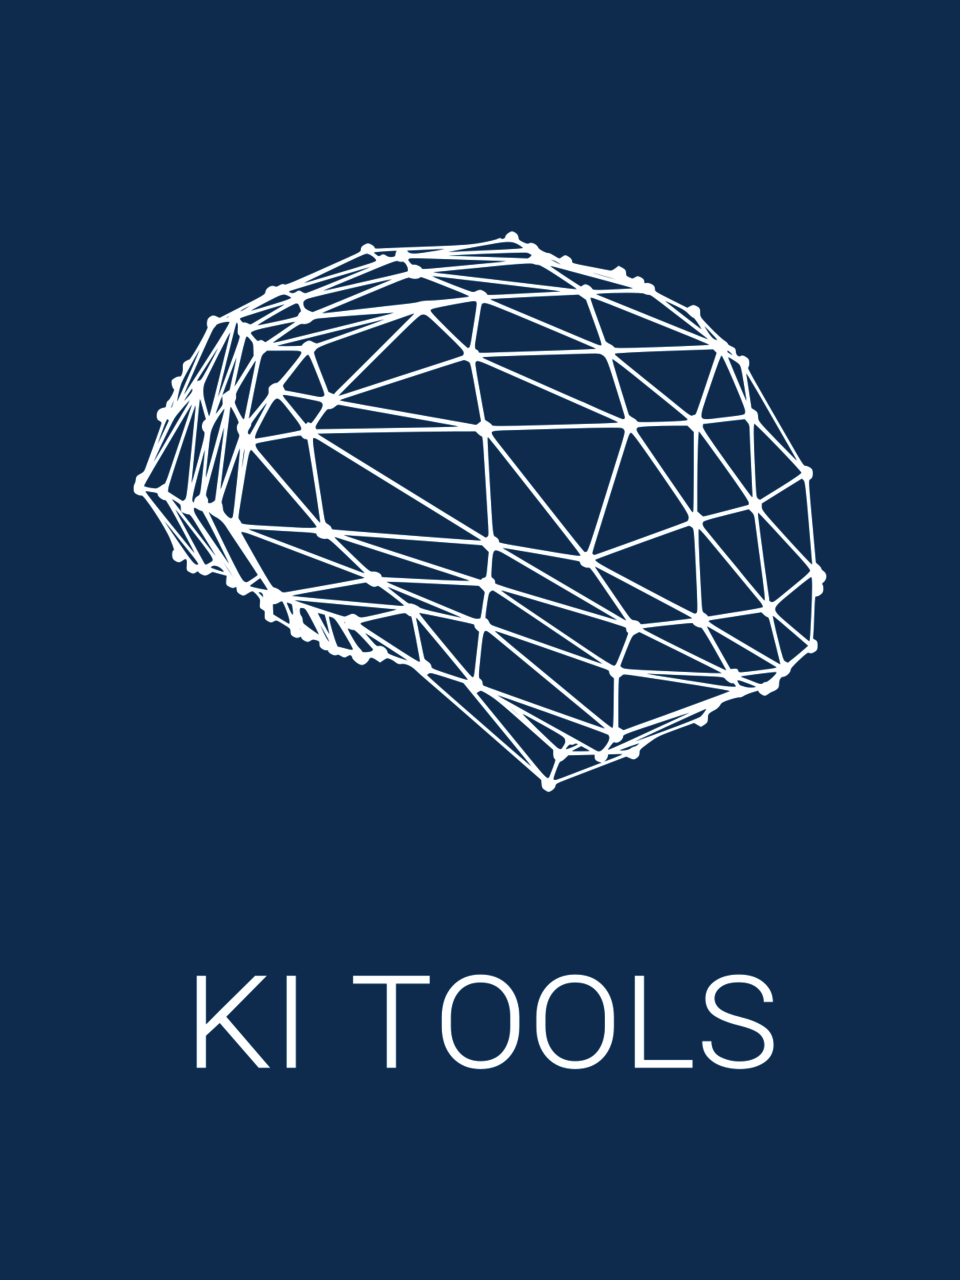 KI Tools